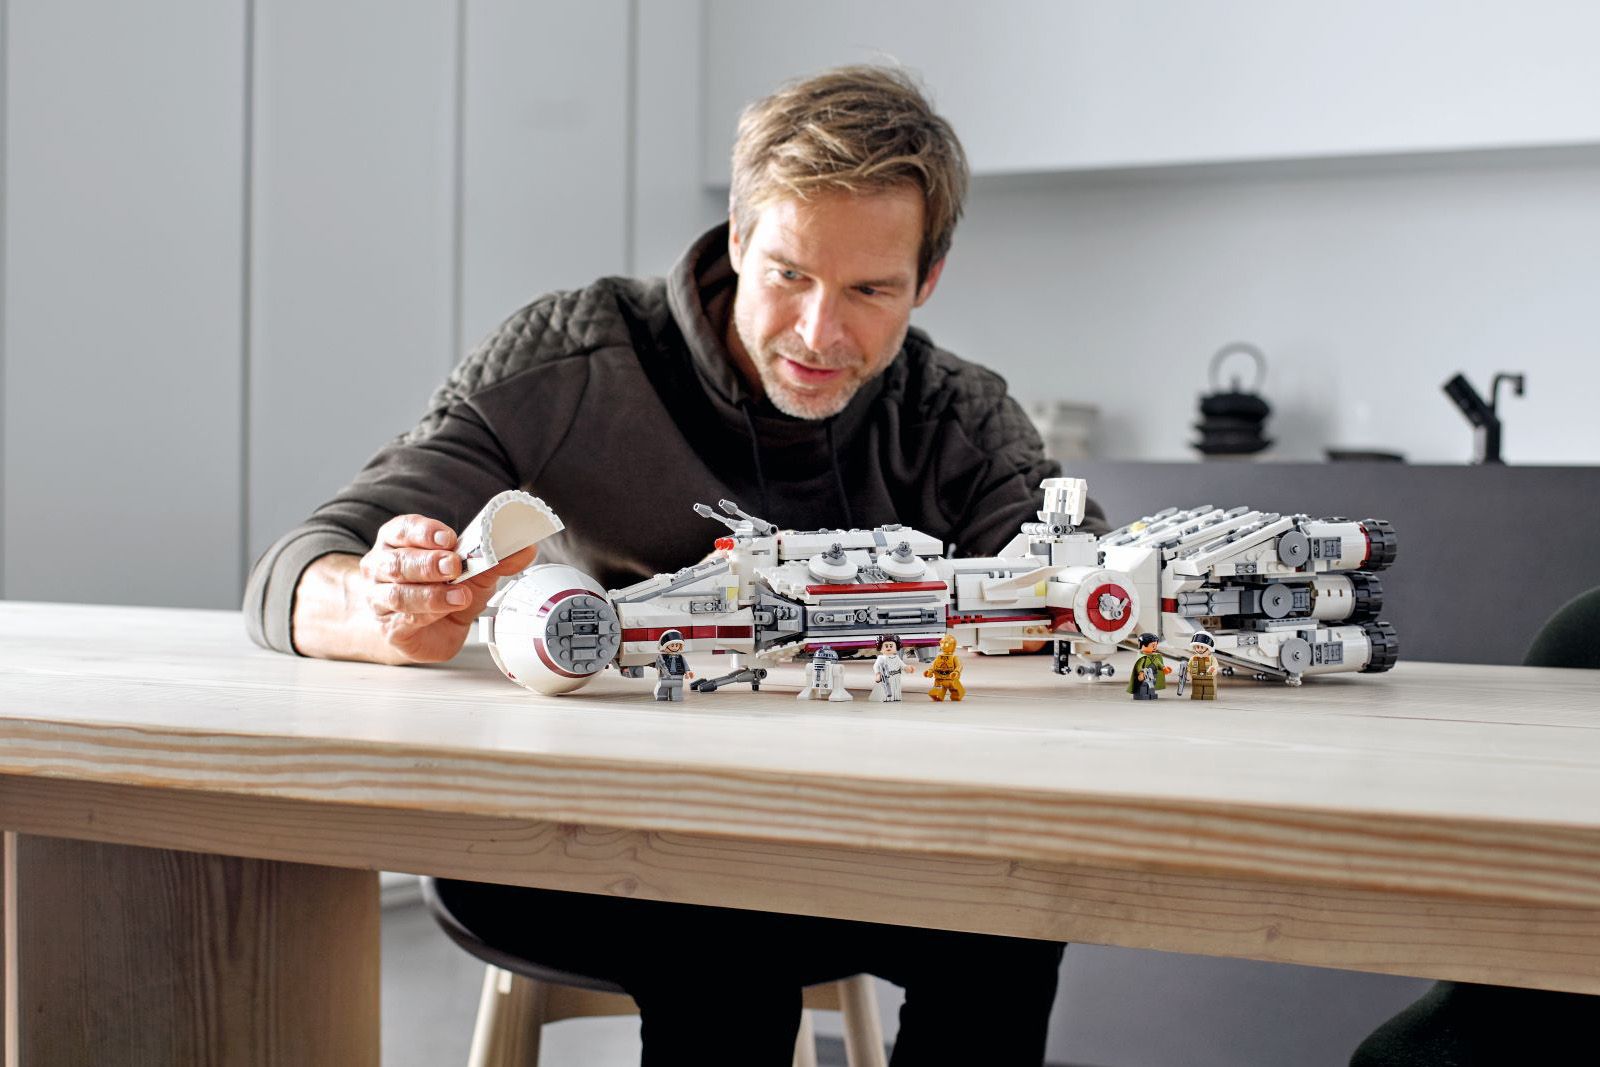 Lego Star Wars image 1